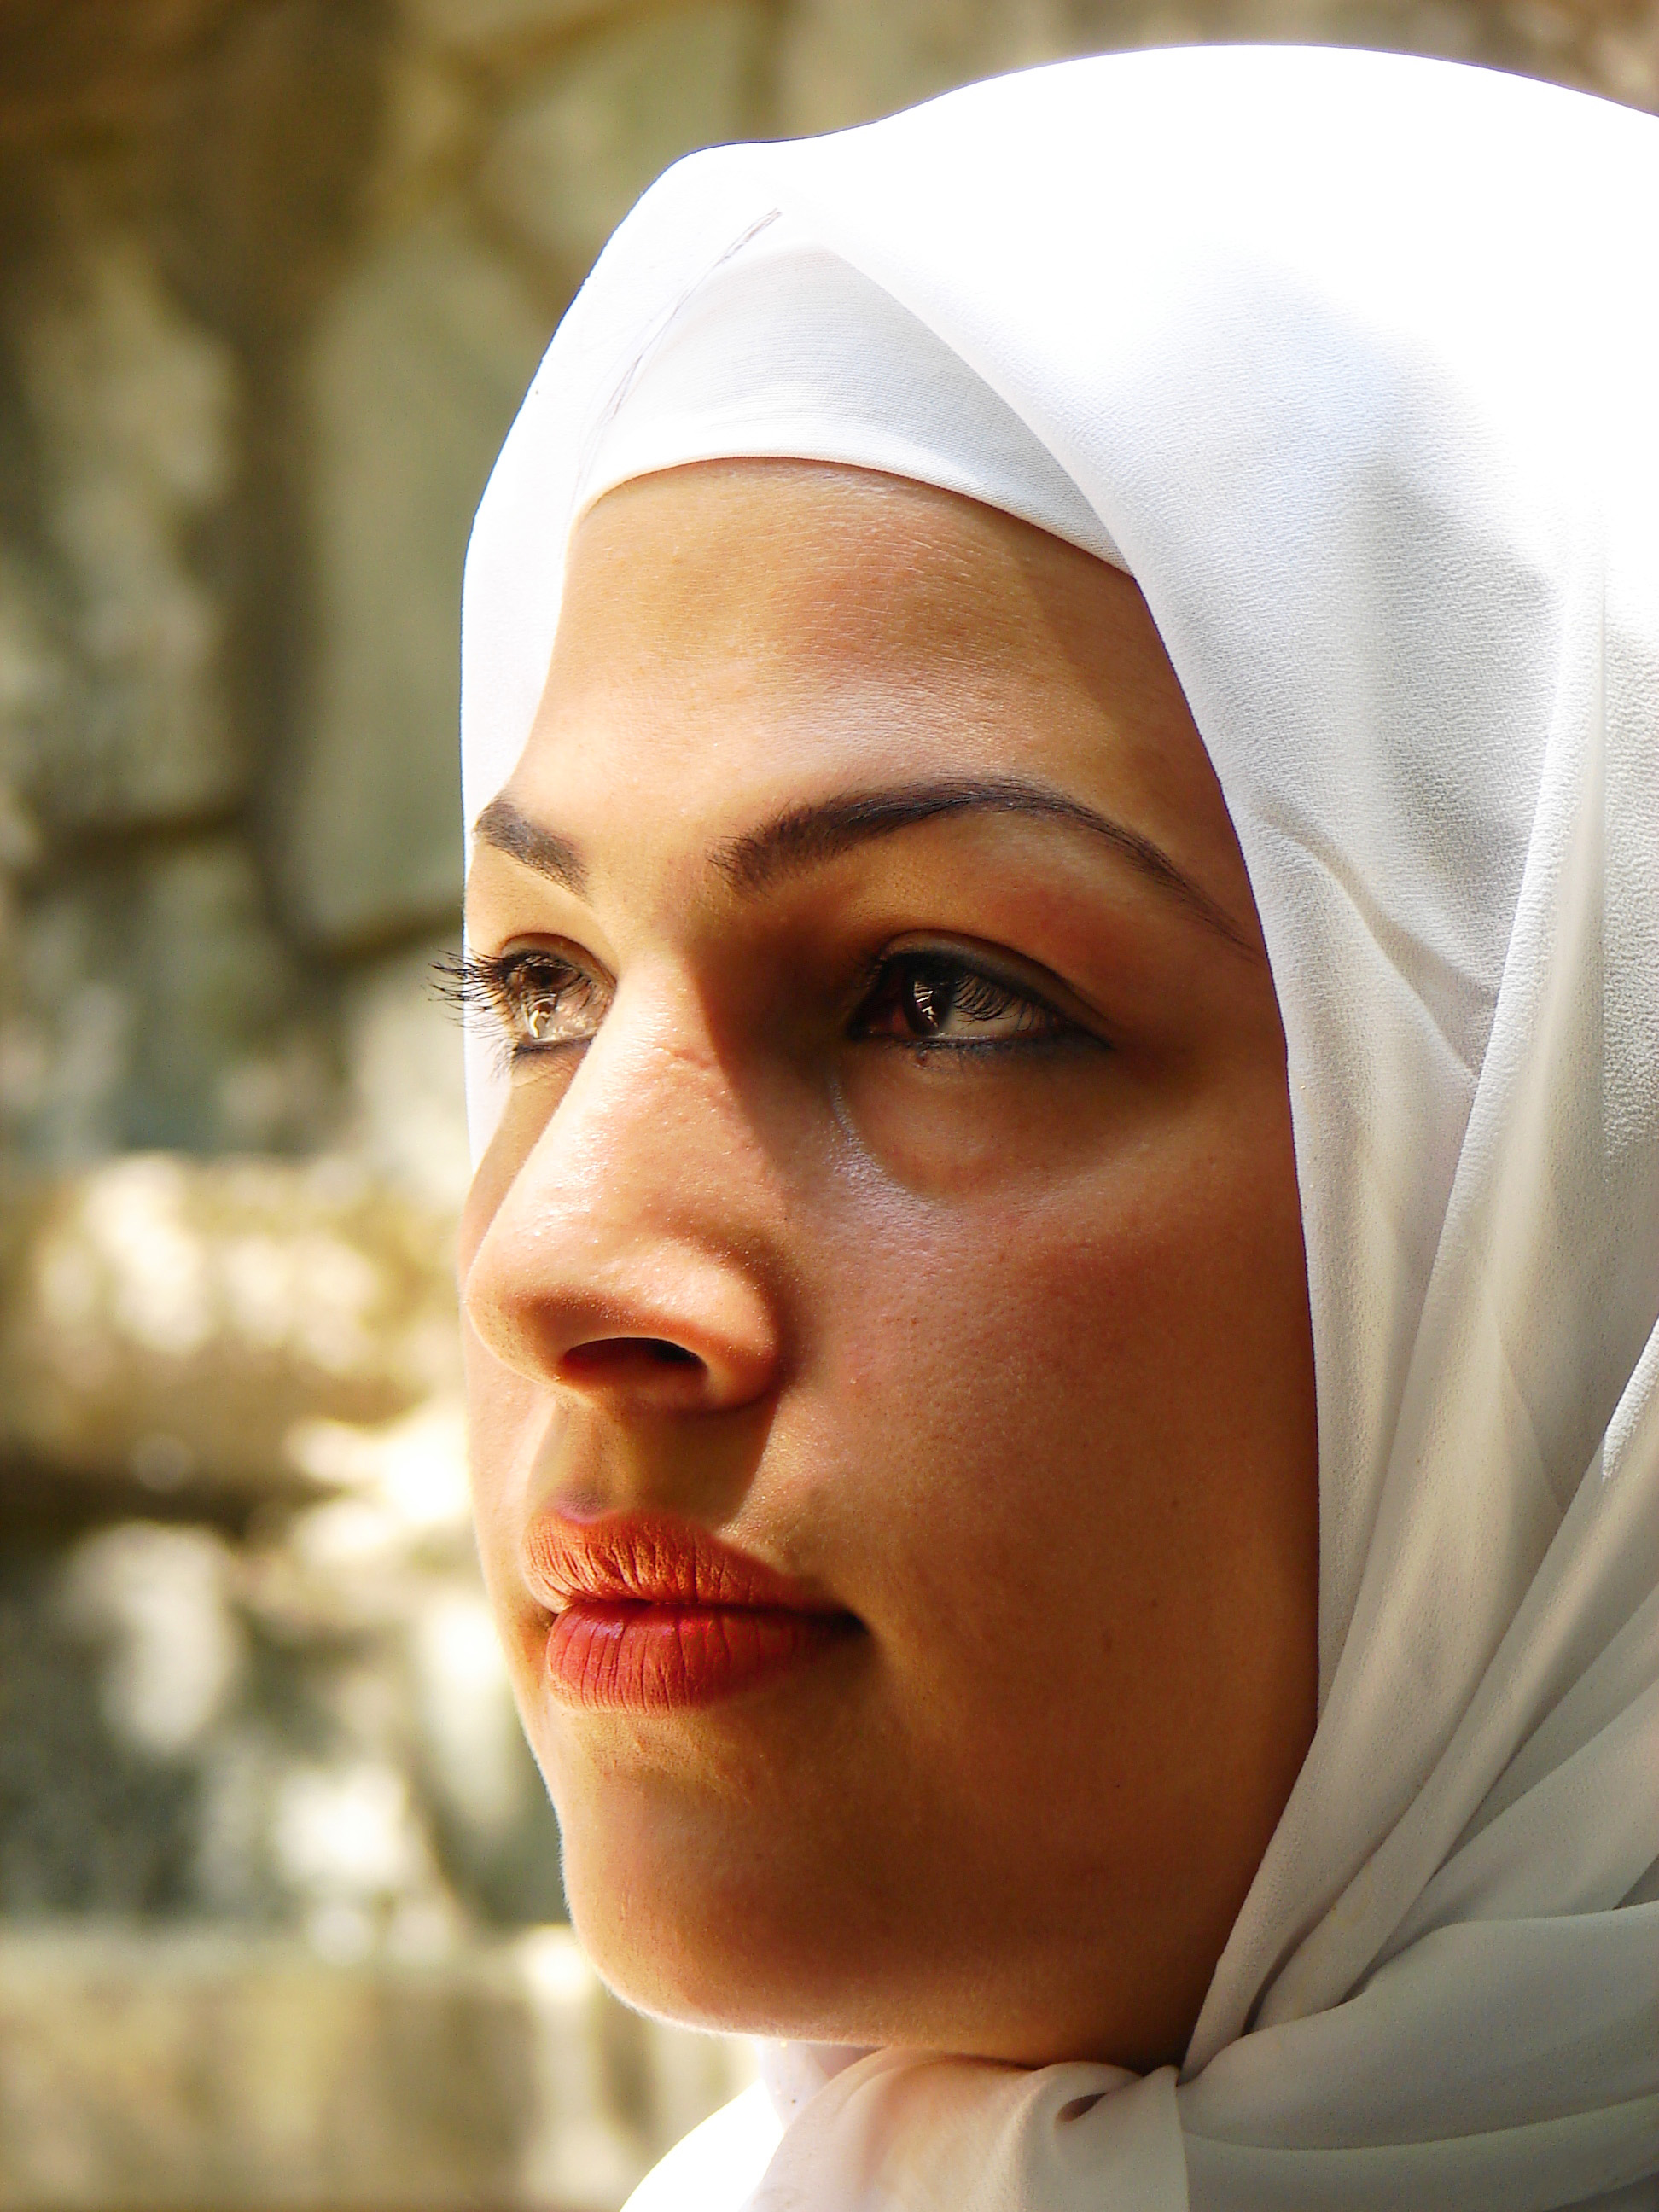 Iranian women - white scarf